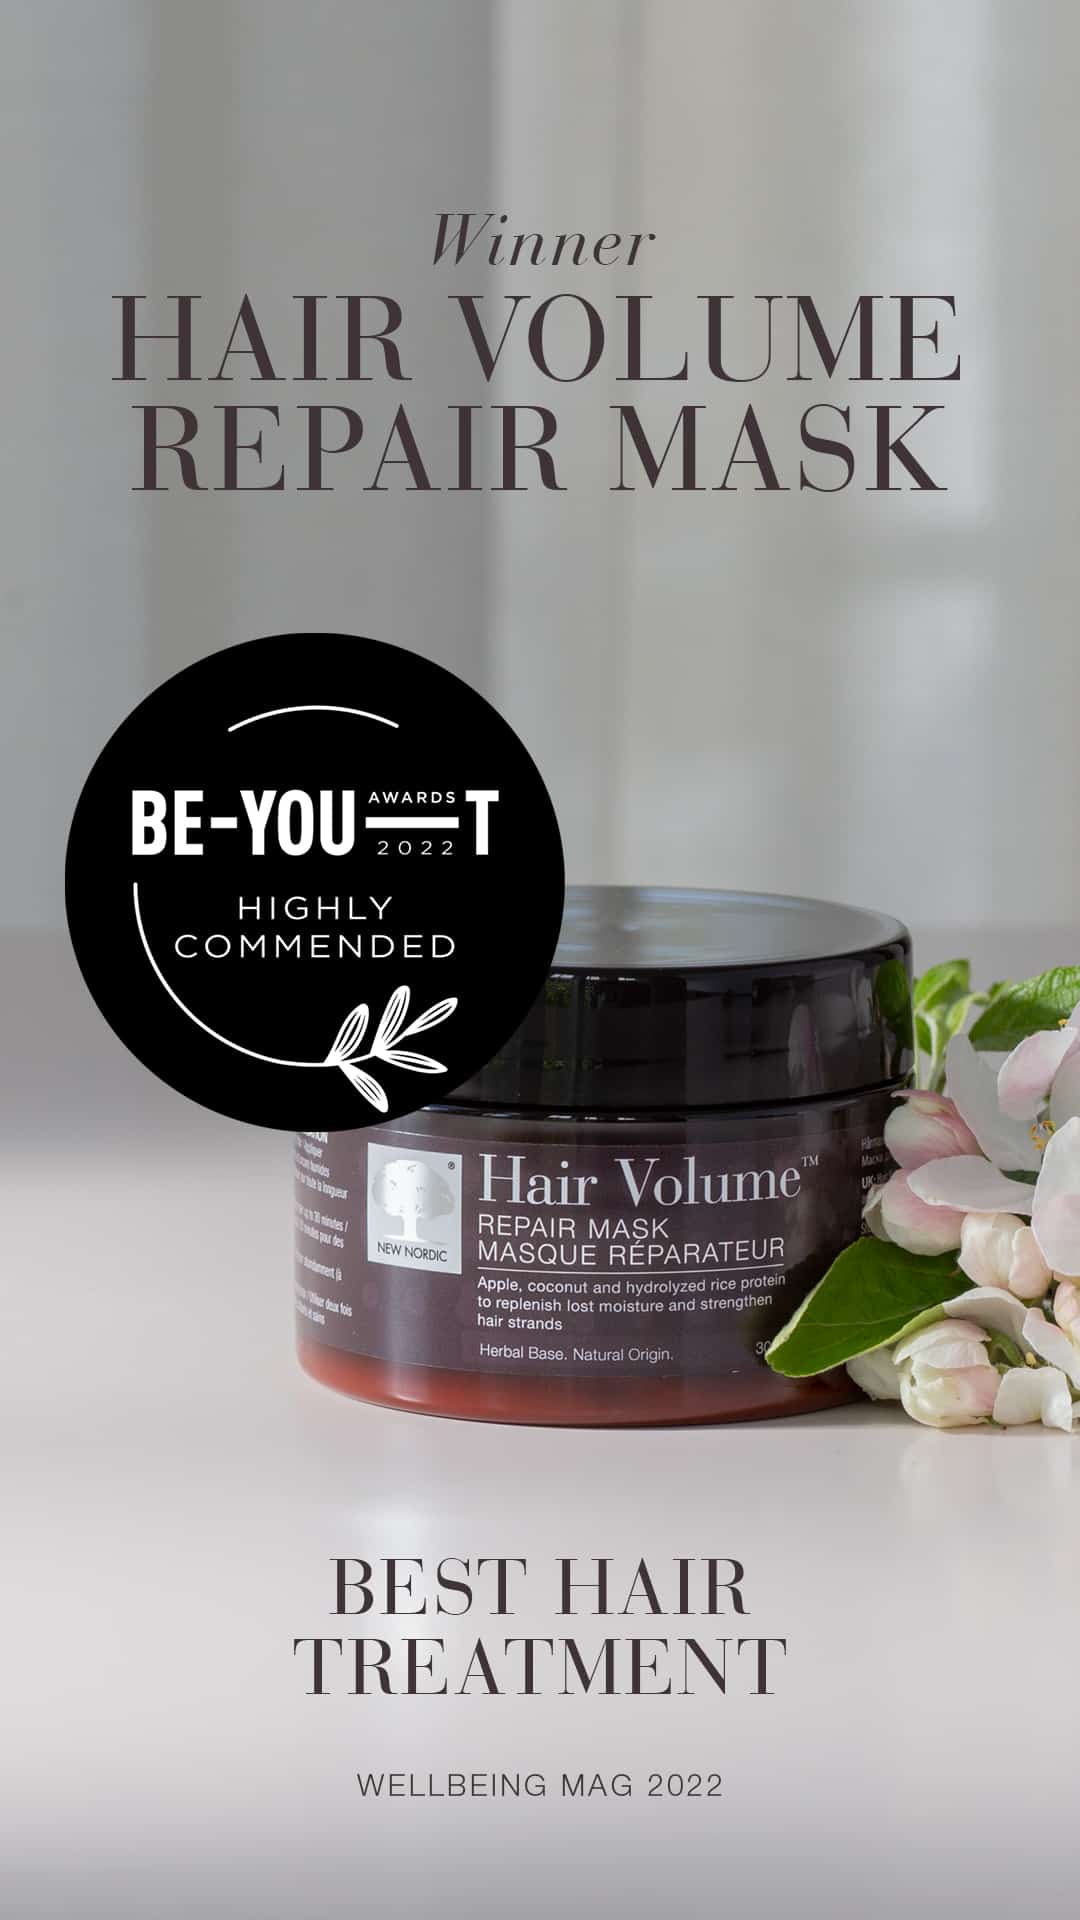 Hair Volume™ Repair Mask won a beauty award